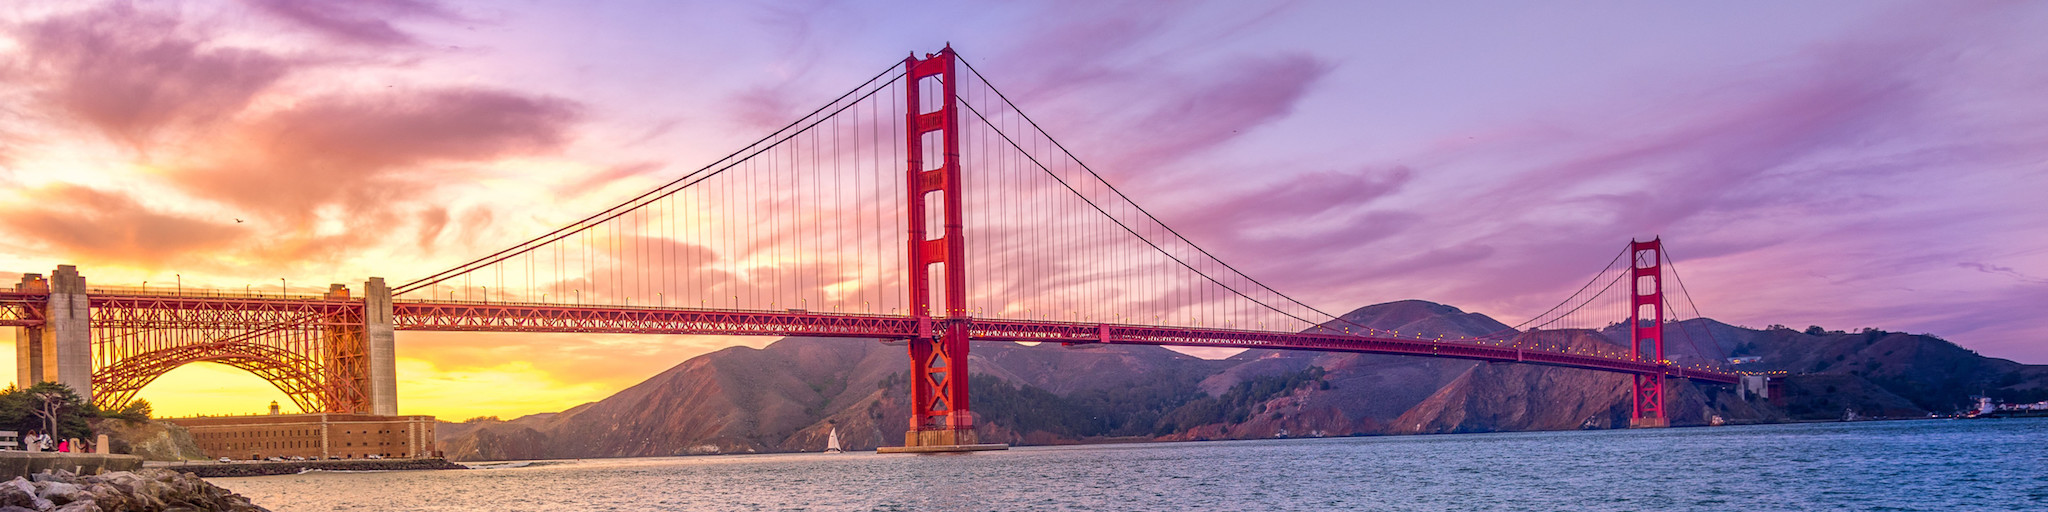 Golden Gate bridge image - public domain photo via Good Free Photos